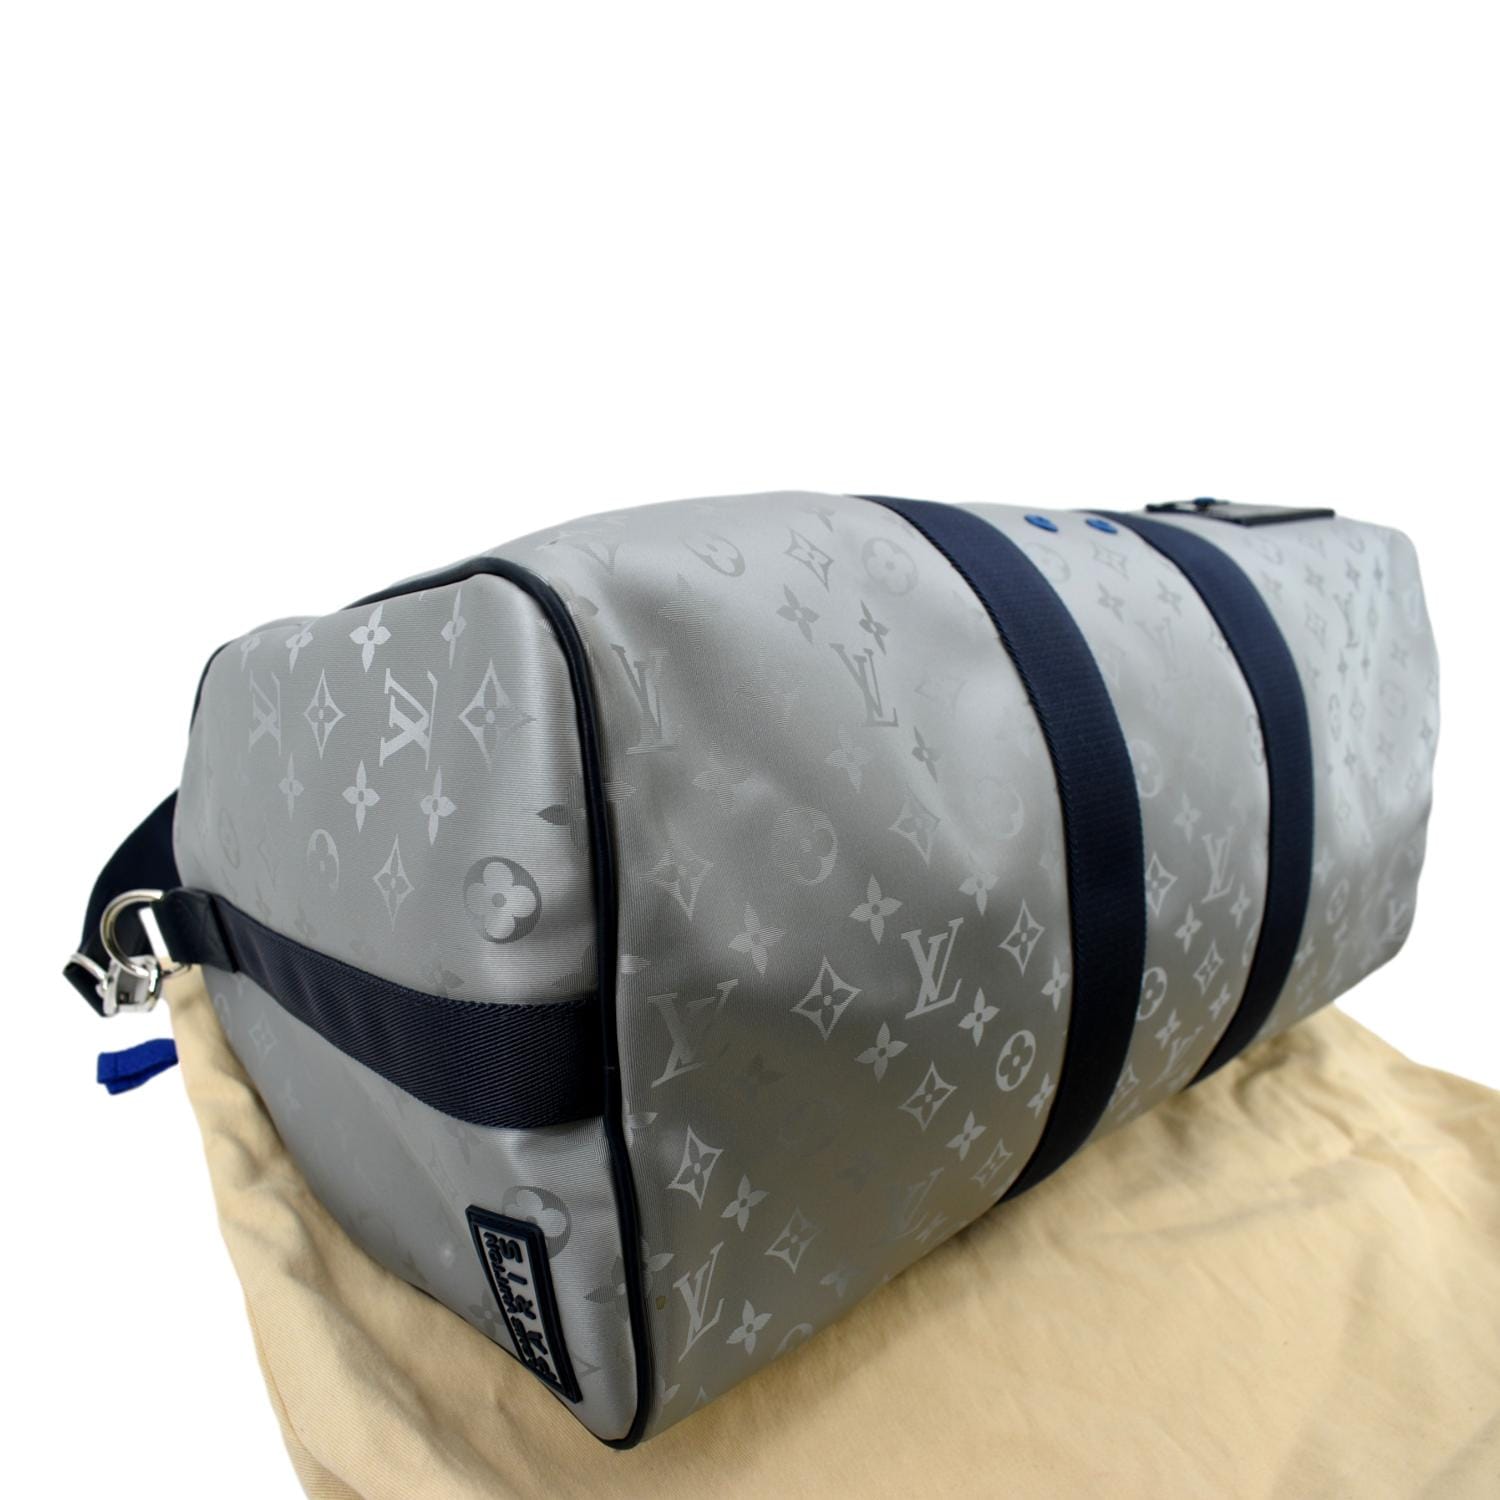 Buy Louis Vuitton Monogram Keepall Bandouliere Travel Bag (Keepall